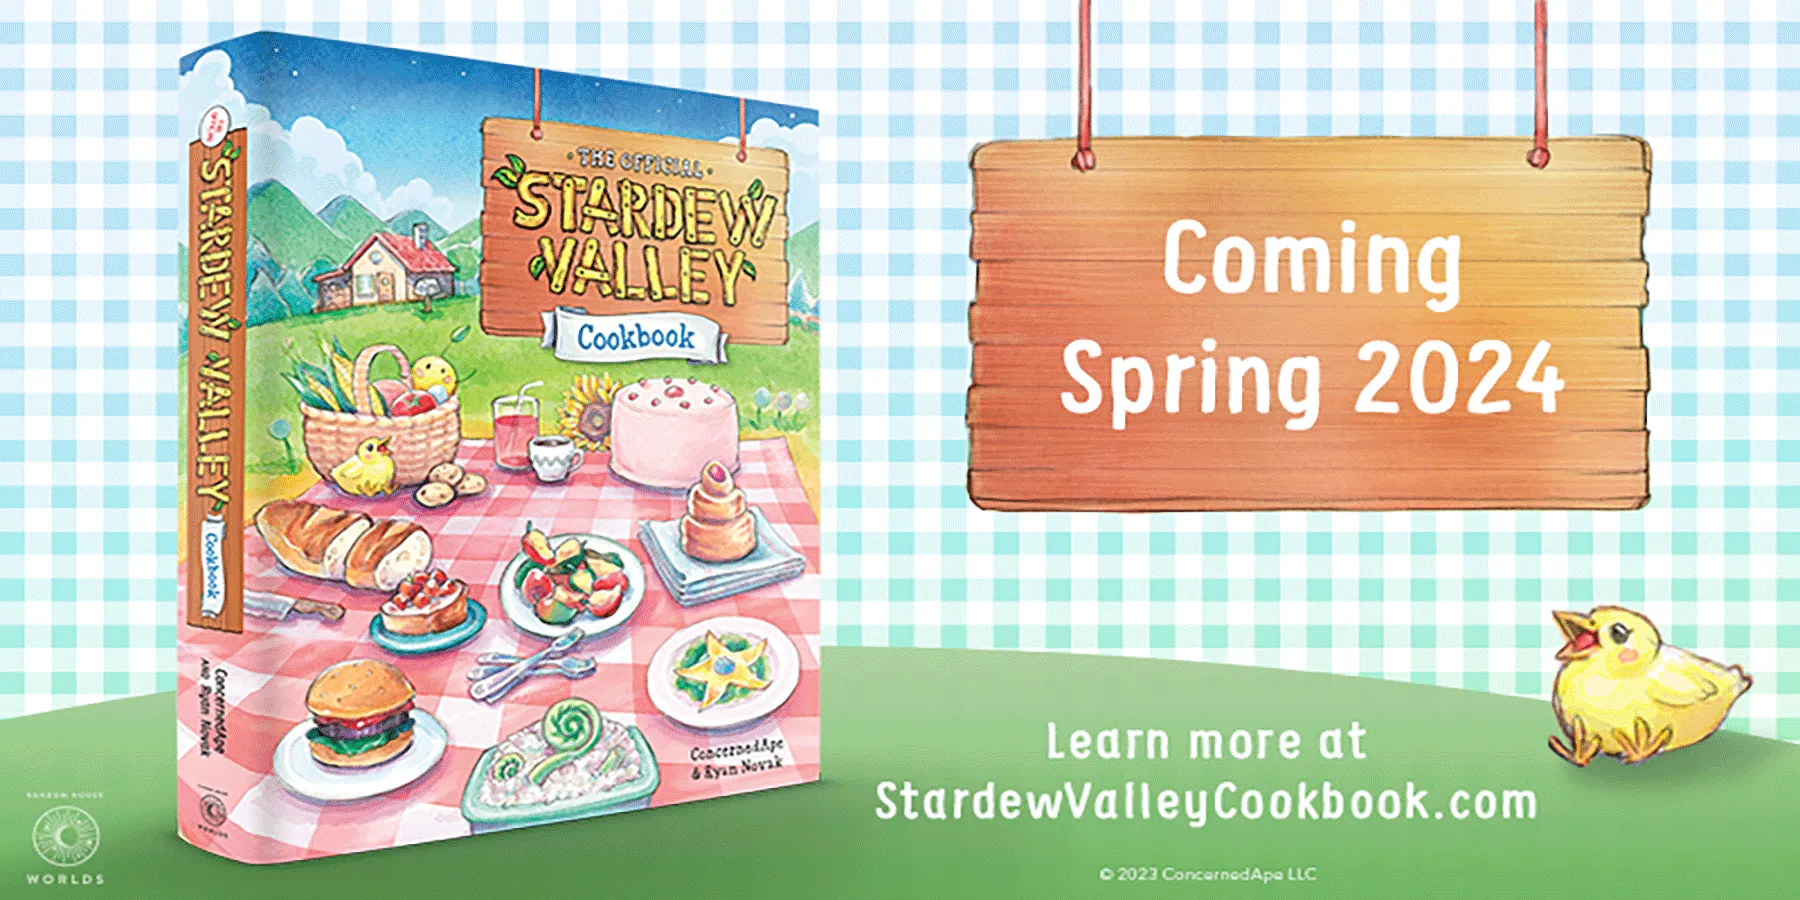 stardewvalley-cookbook